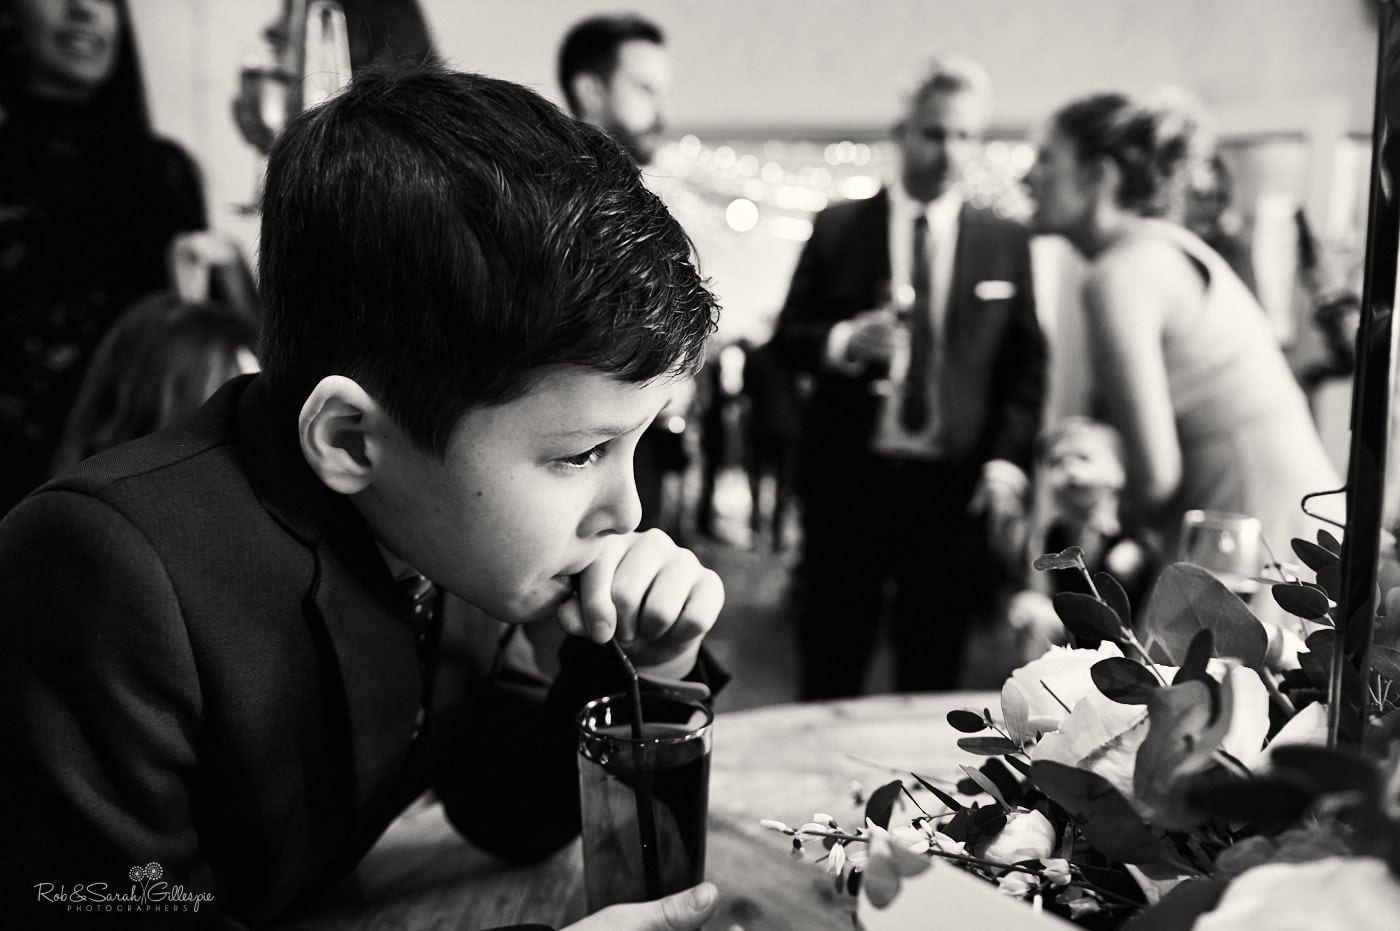 Young boy drinks through straw at wedding reception